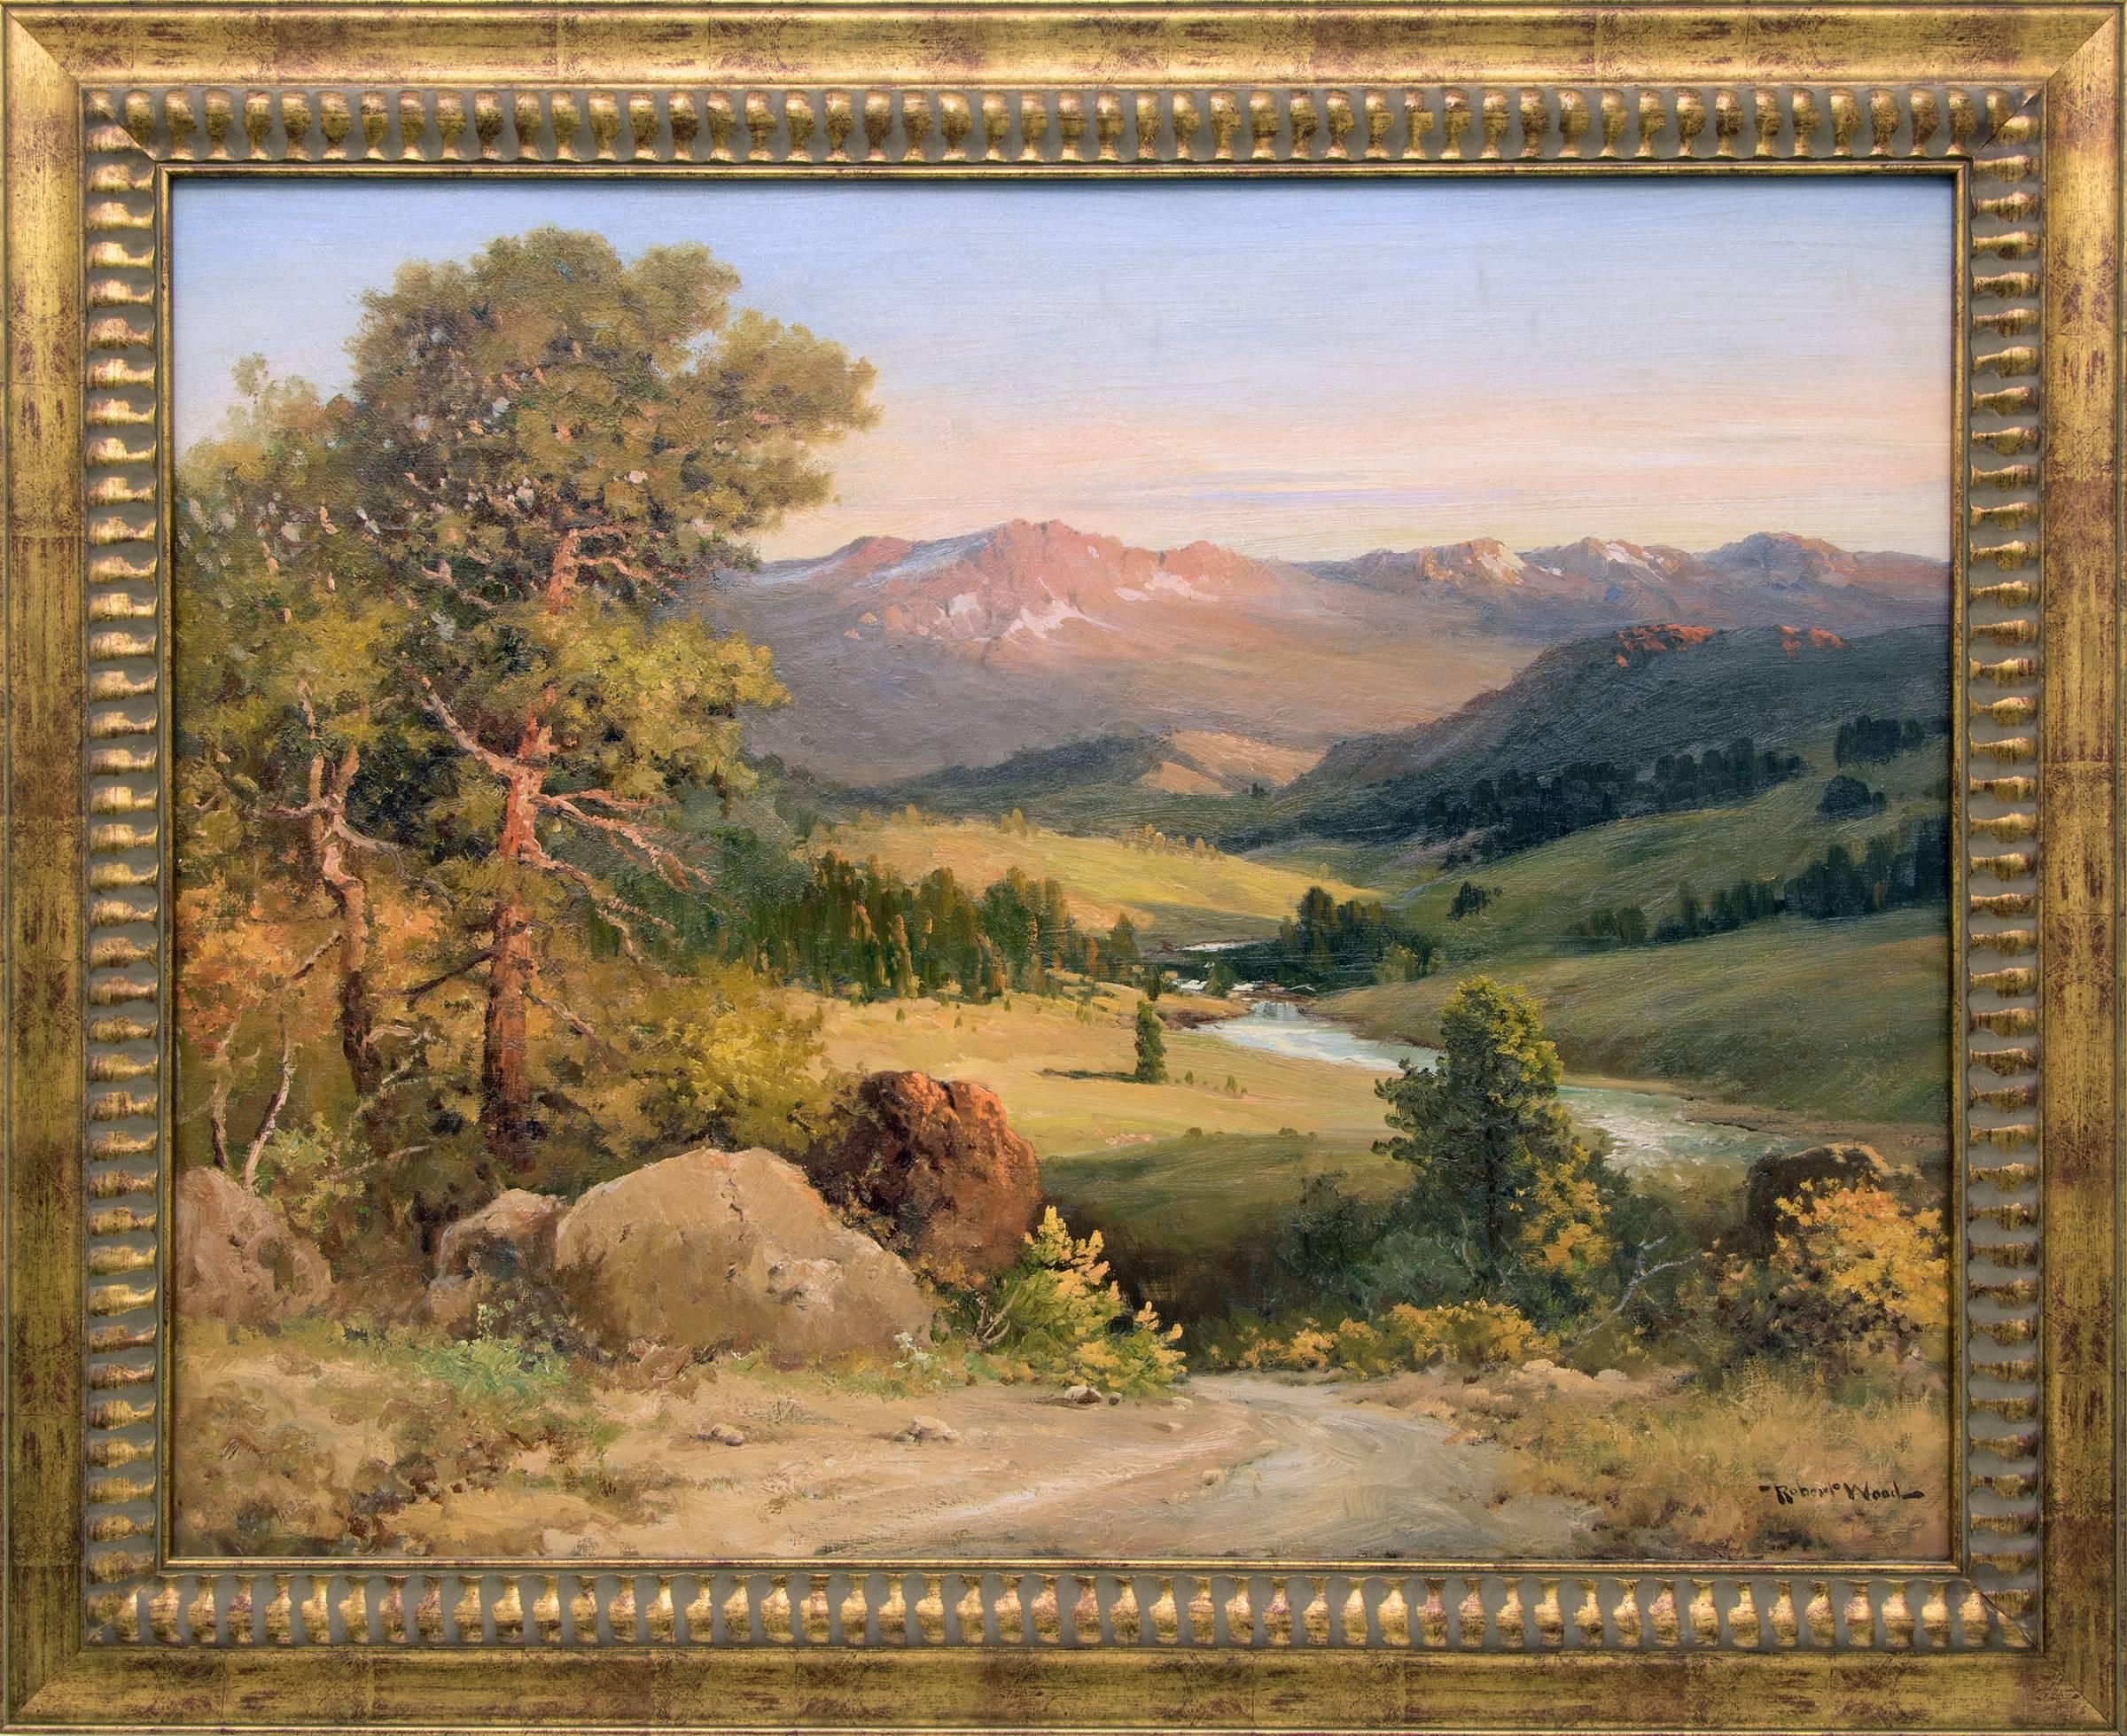 Estes Park, Colorado (Rocky Mountain National Park Landscape) - Painting by Robert William Wood